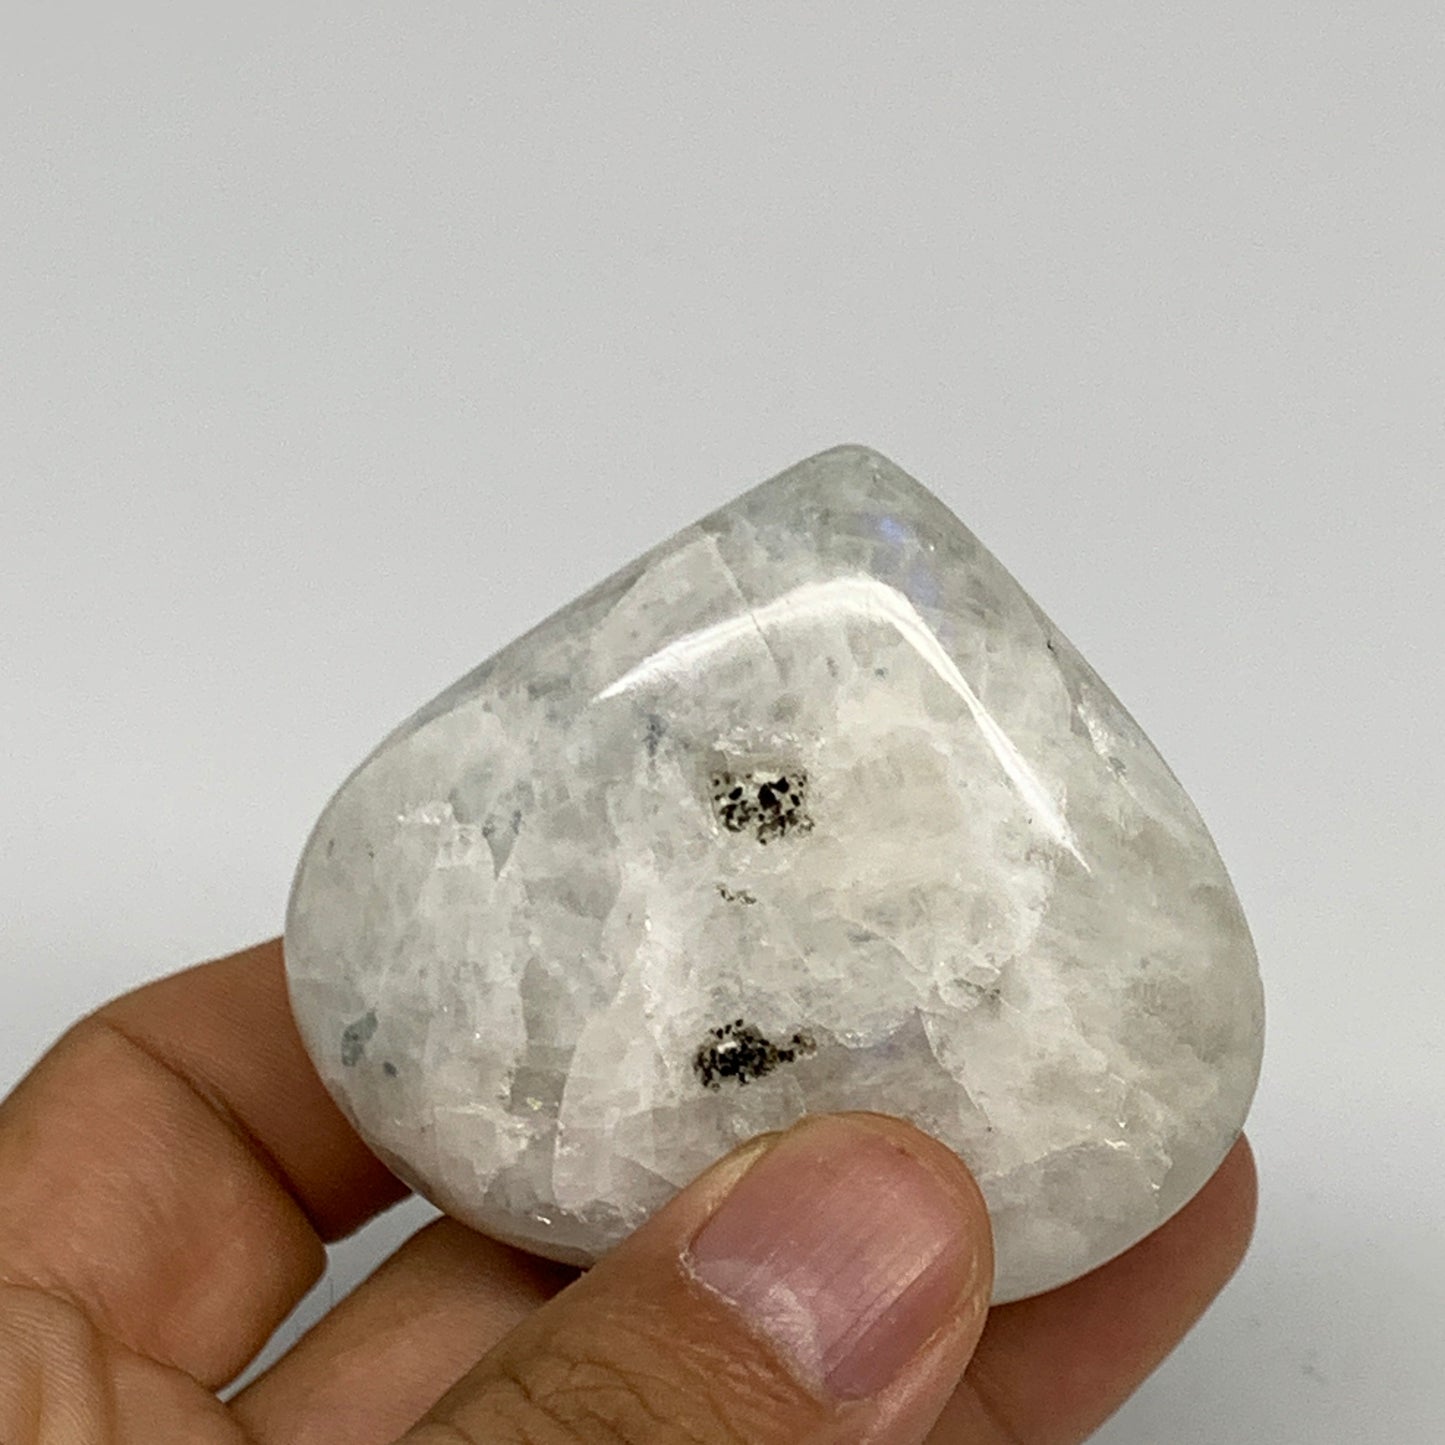 99.4g, 2"x2.2"x1", Rainbow Moonstone Heart Crystal Gemstone @India, B29765